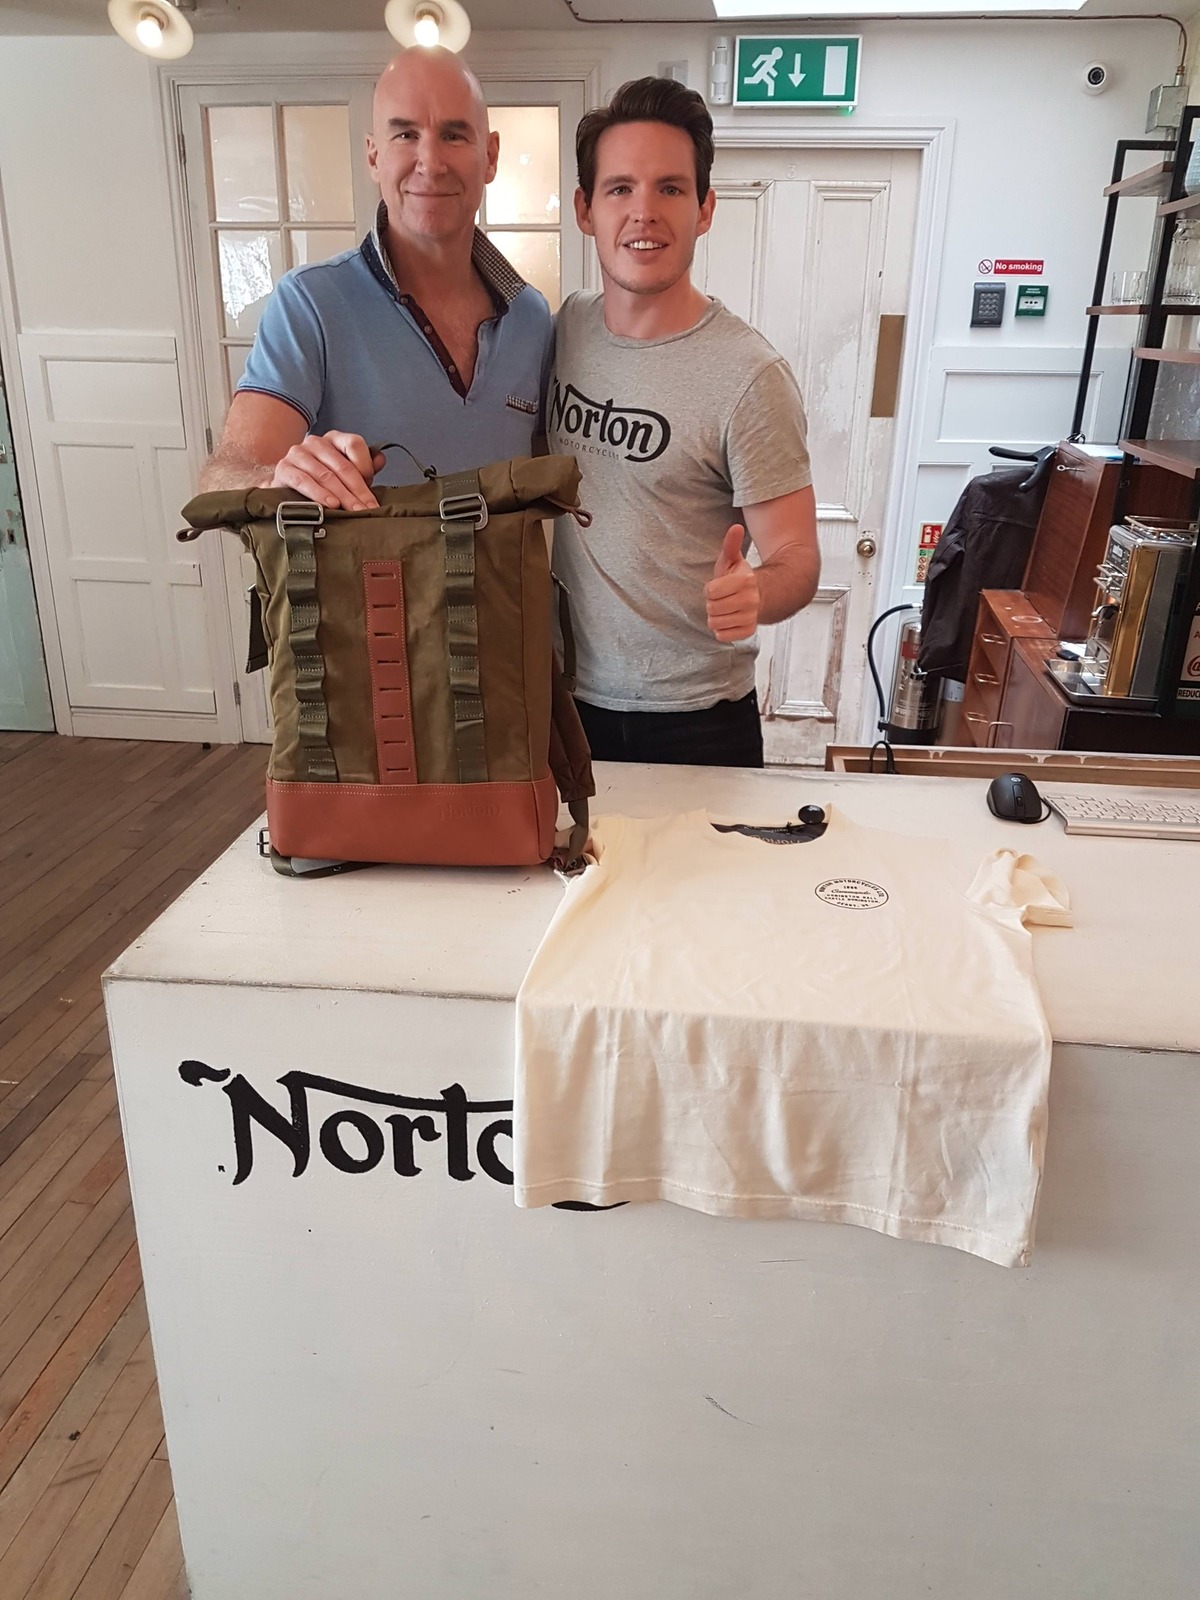 Hello from Norton UK